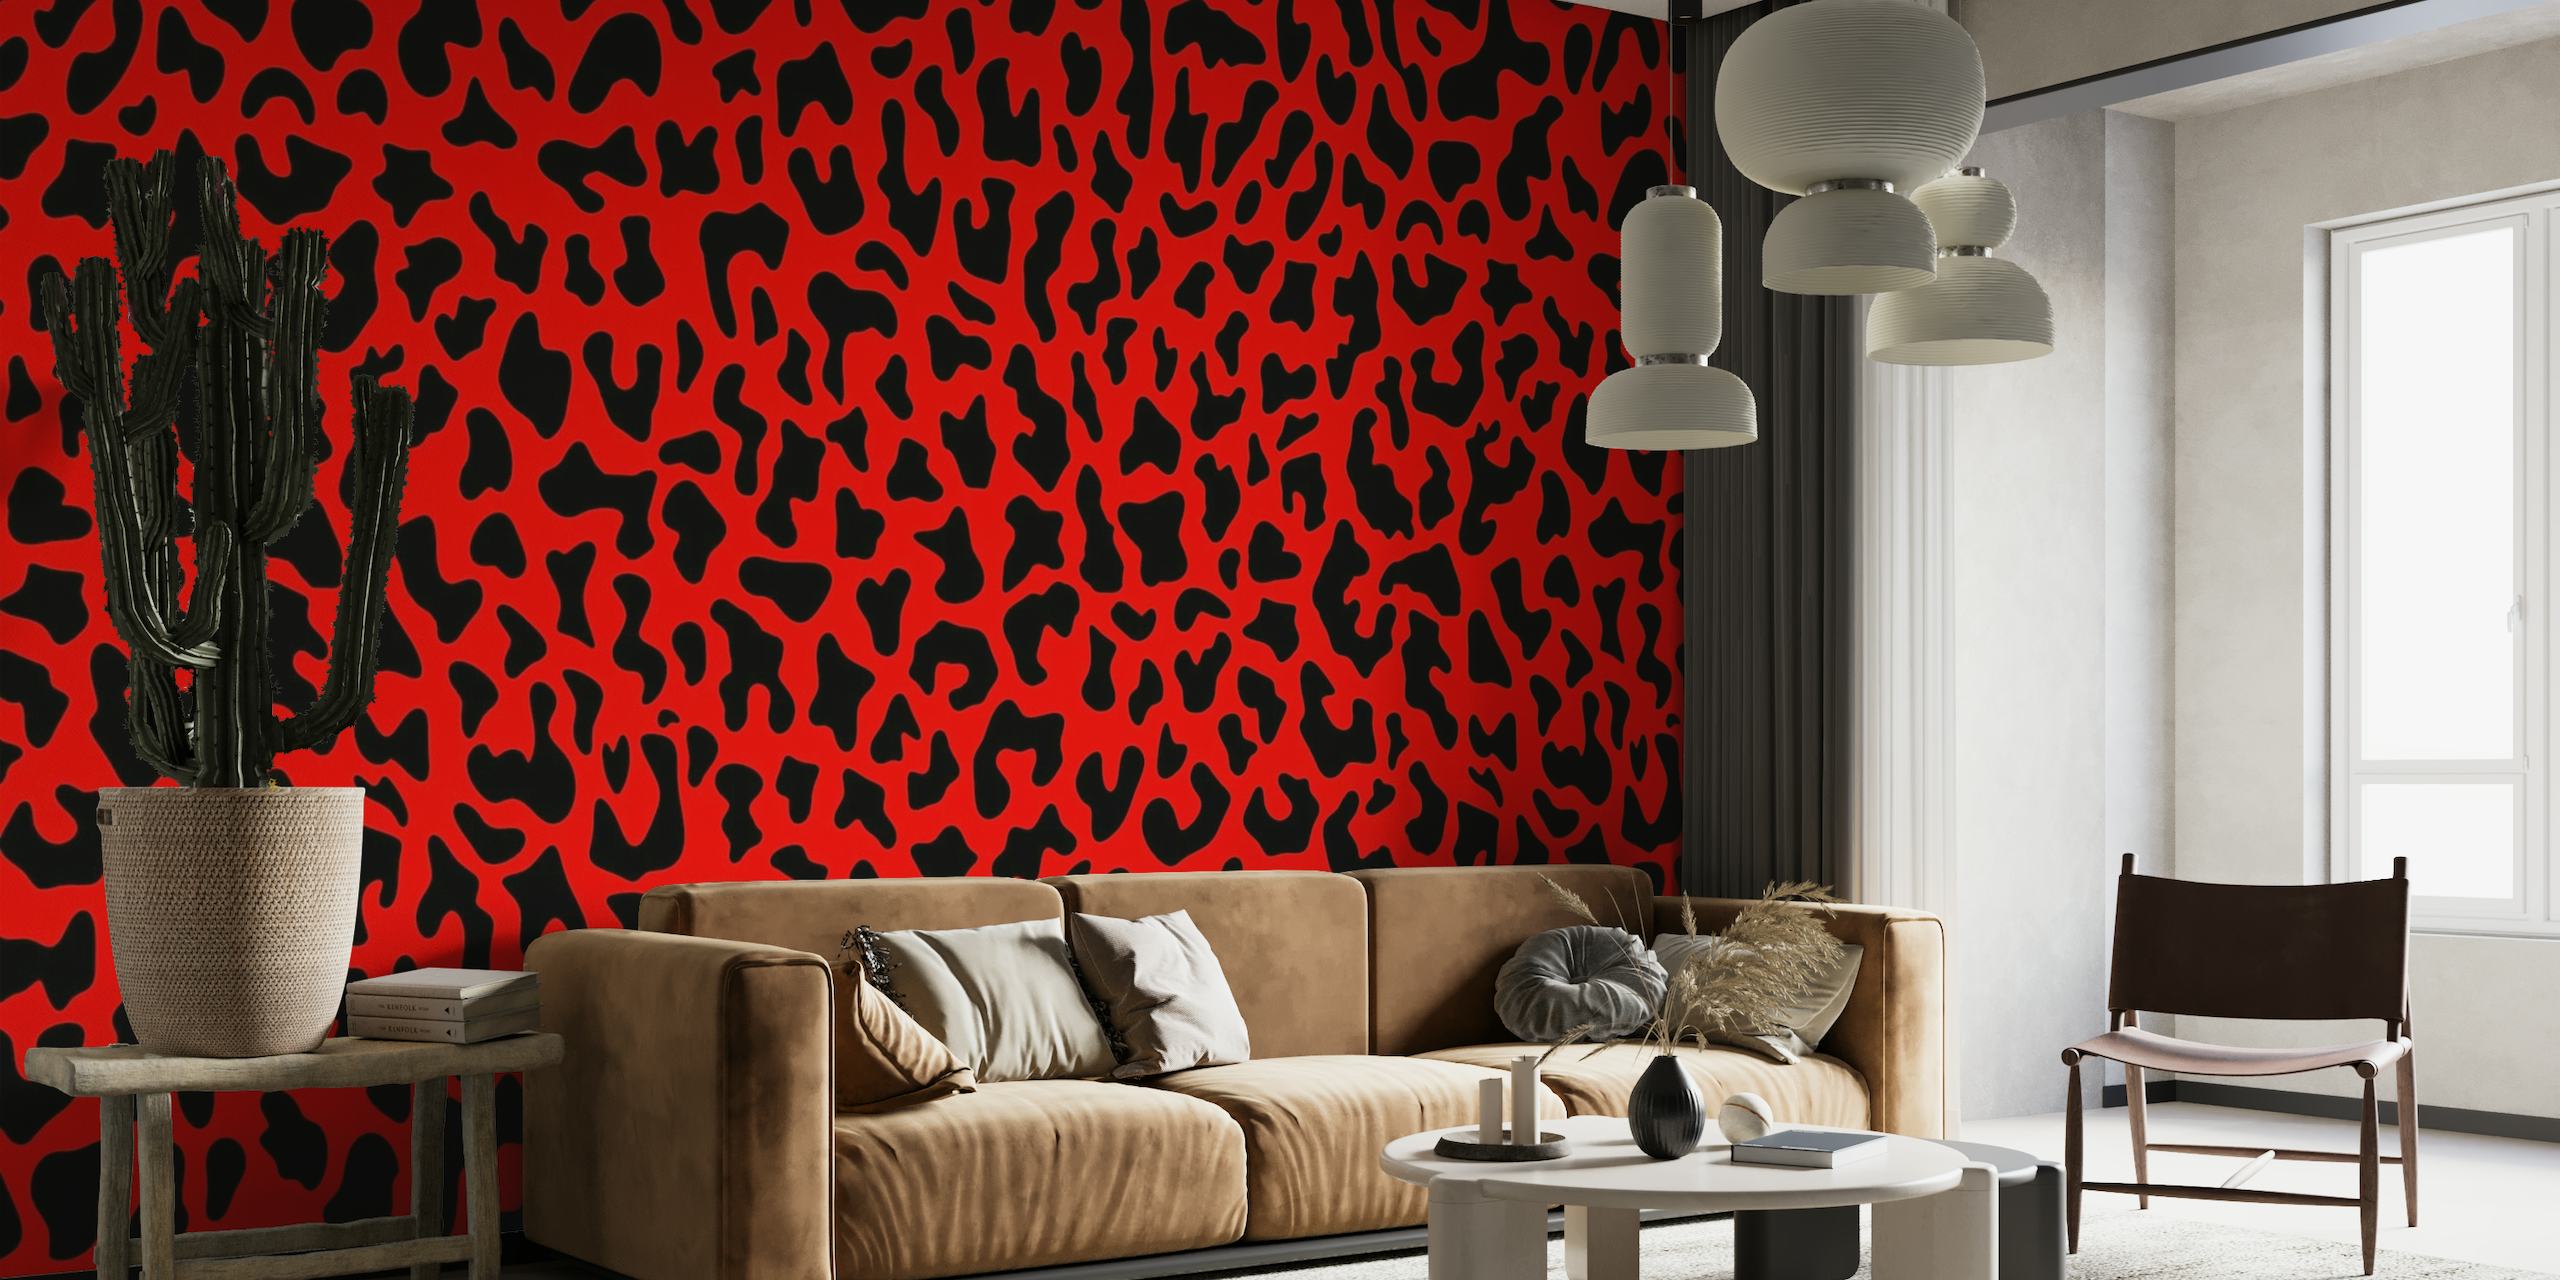 Leopard Print on Red wallpaper